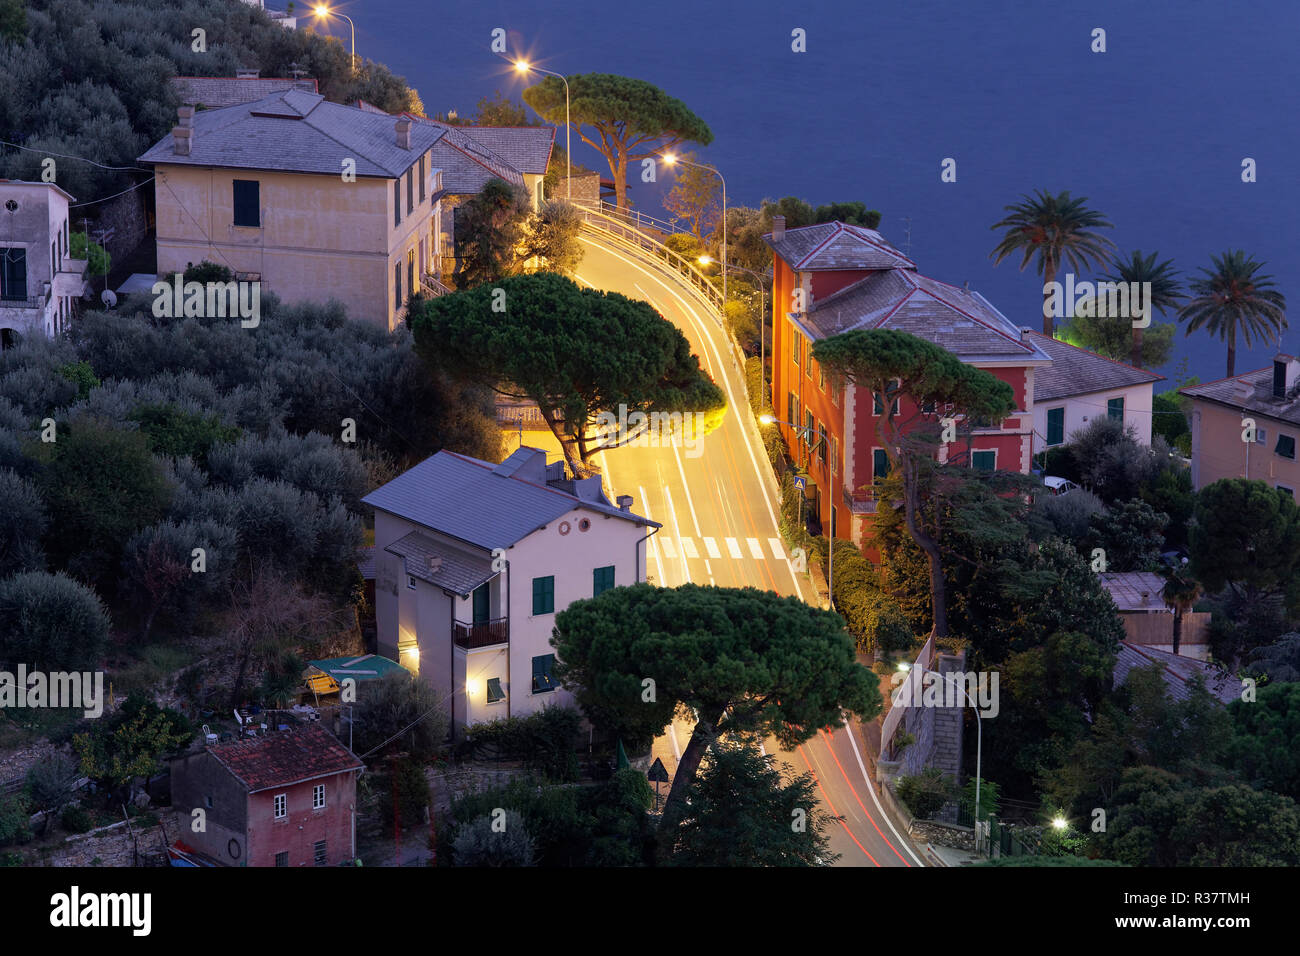 Road bend between houses and pines, at night, illuminated, Province of Genoa, Italian Riveria, Riviera di Levante, Liguria Stock Photo